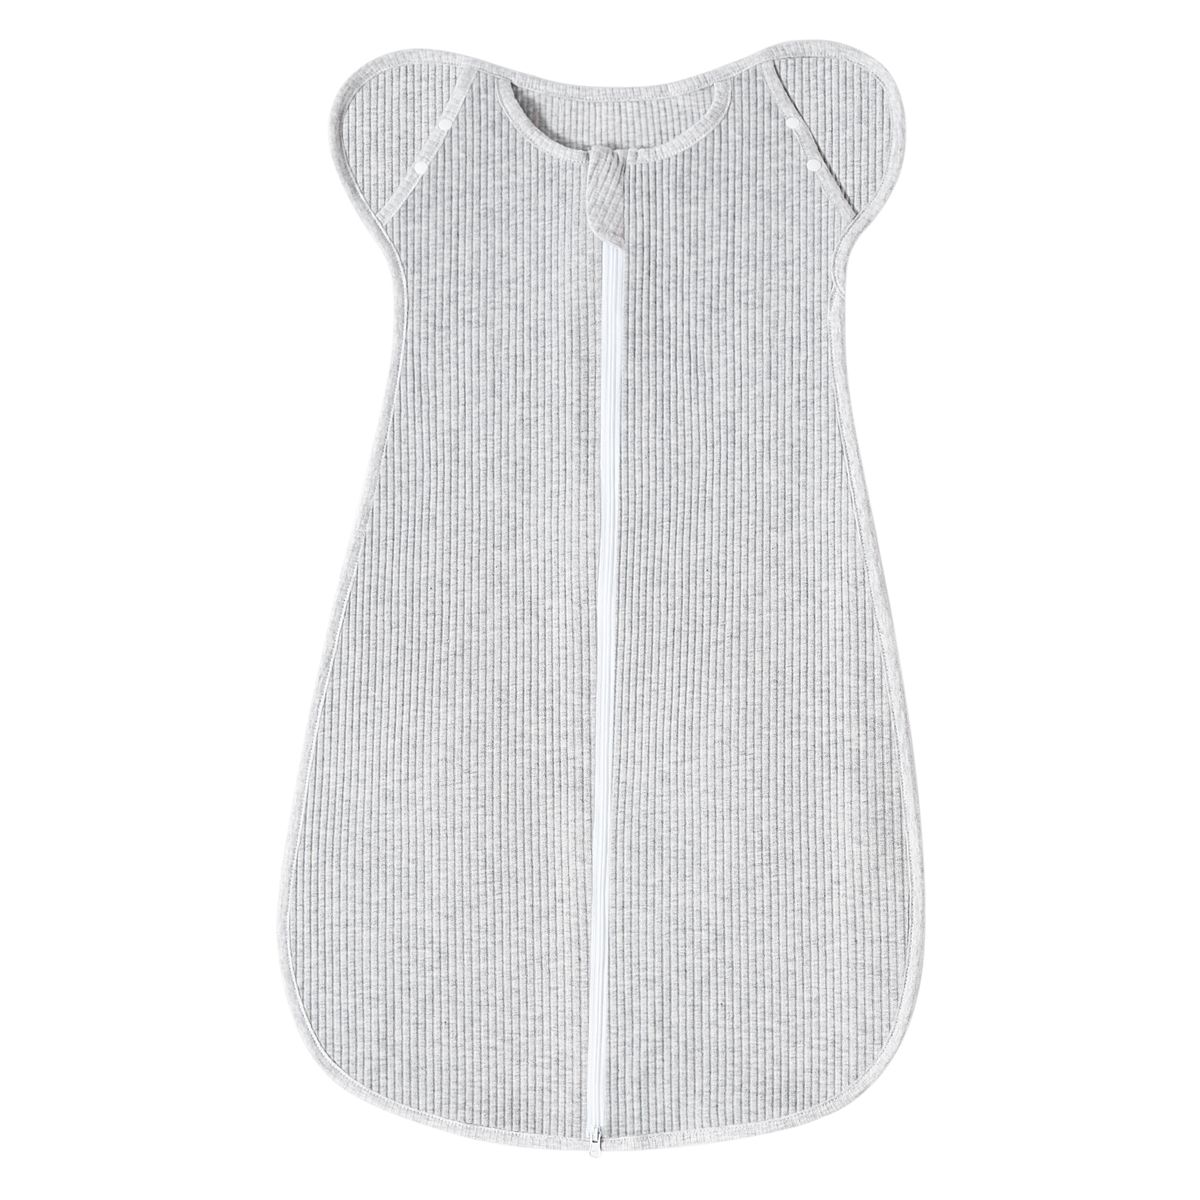 Baby Sleeping Bags Boys/Girls Cute 100% Cotton Plush Receiving Blanket